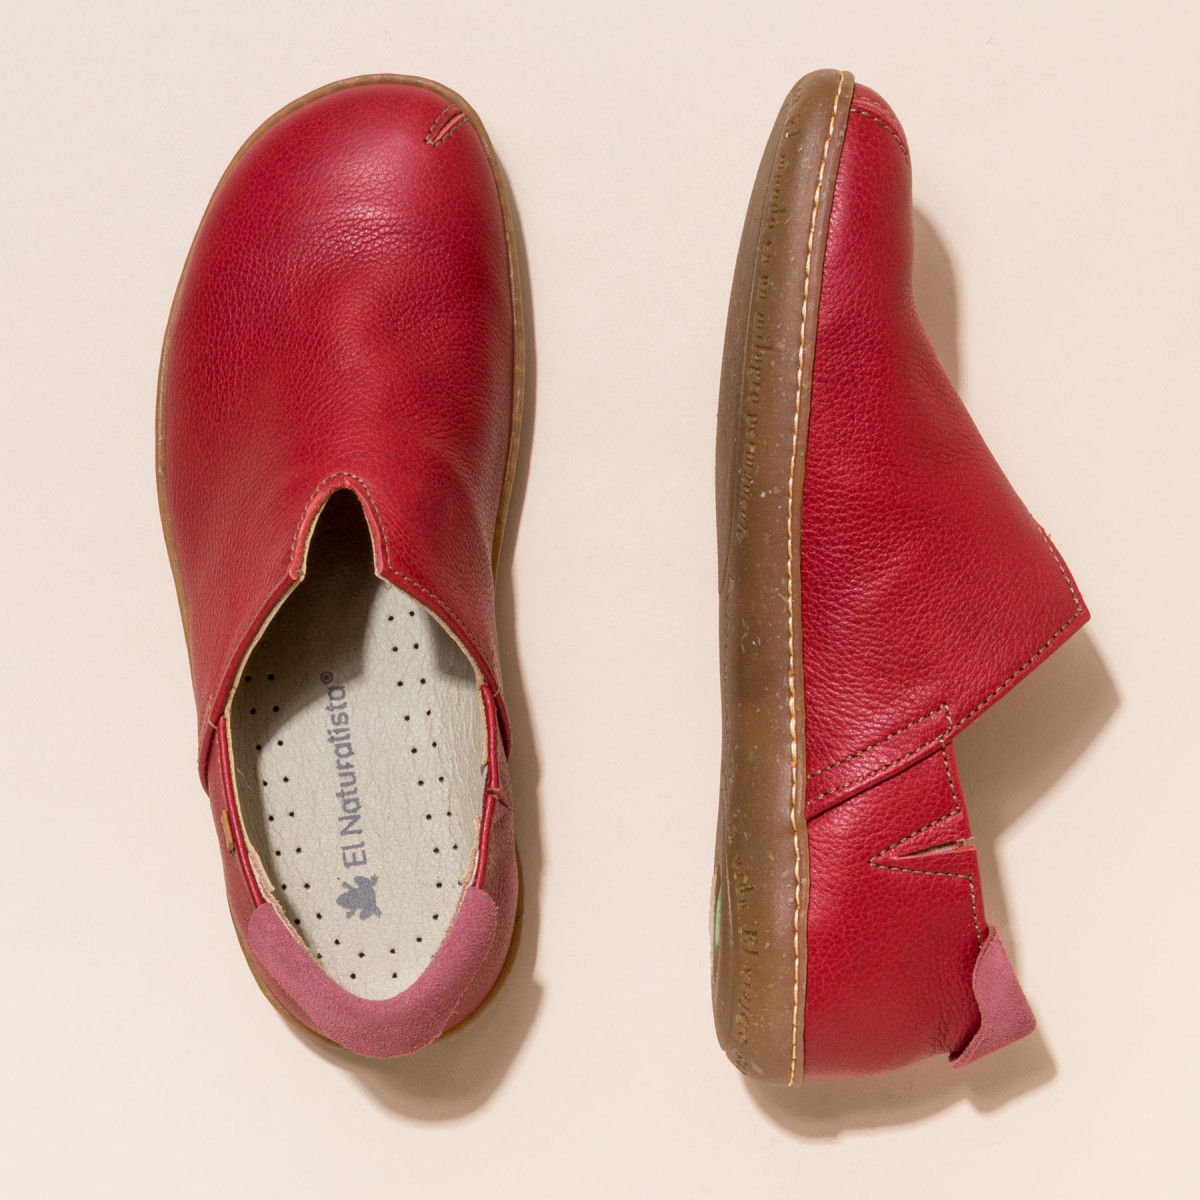 Chaussures confort en cuir naturel et semelles recyclées - Rouge - El naturalista